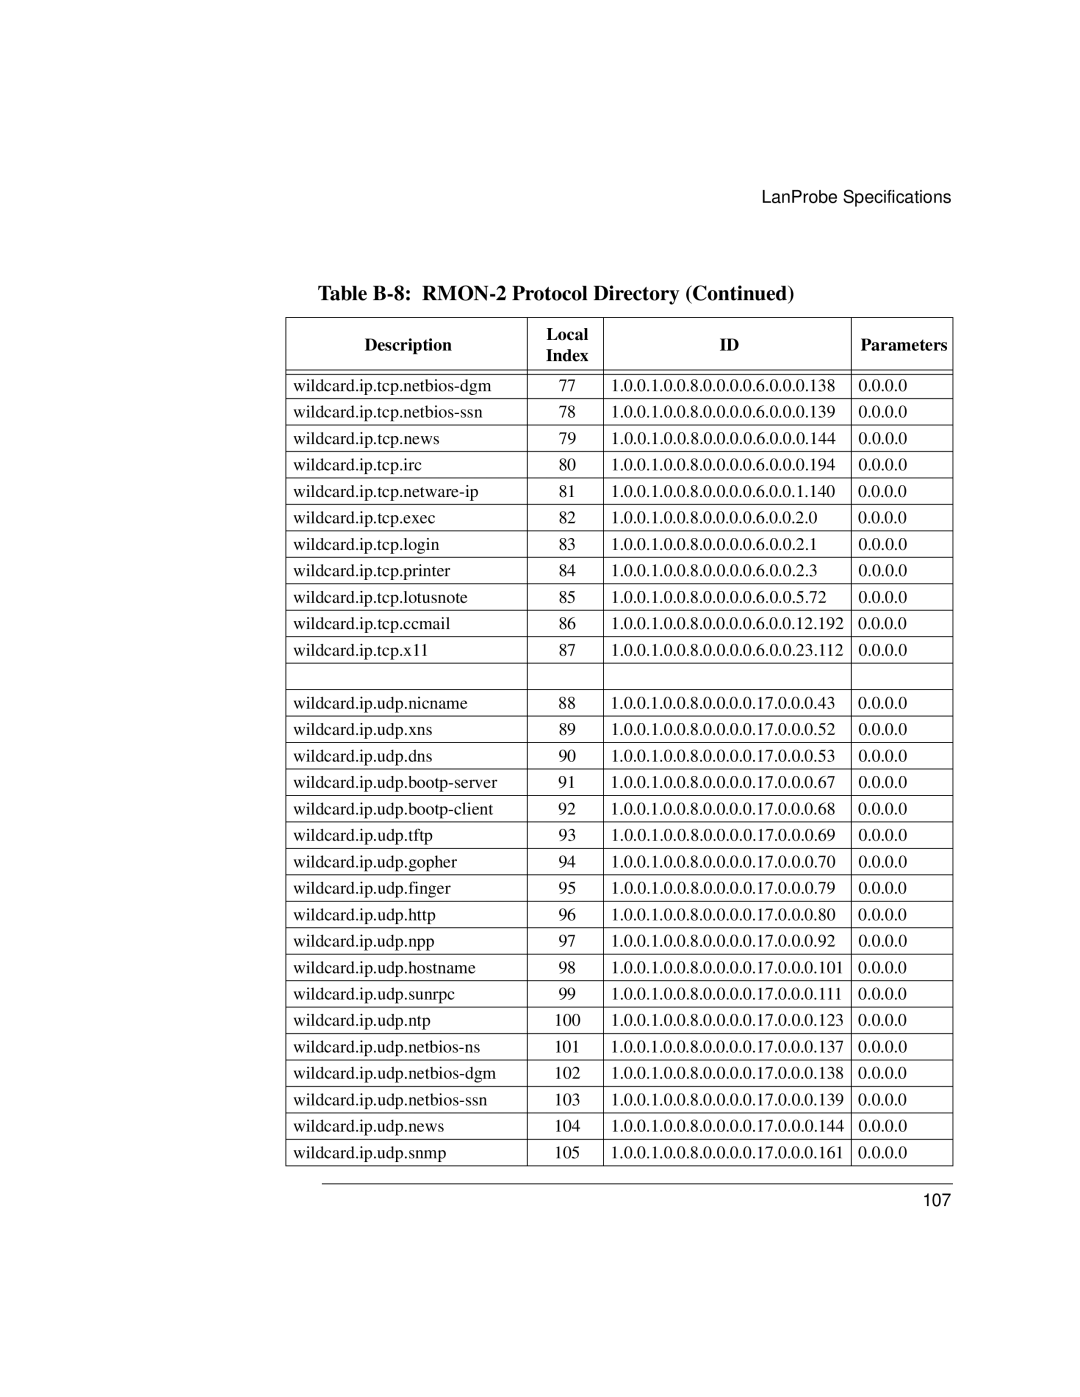 IBM 4986B LanProbe manual Table B-8 RMON-2 Protocol Directory Continued, Description, Local, Parameters, Index 